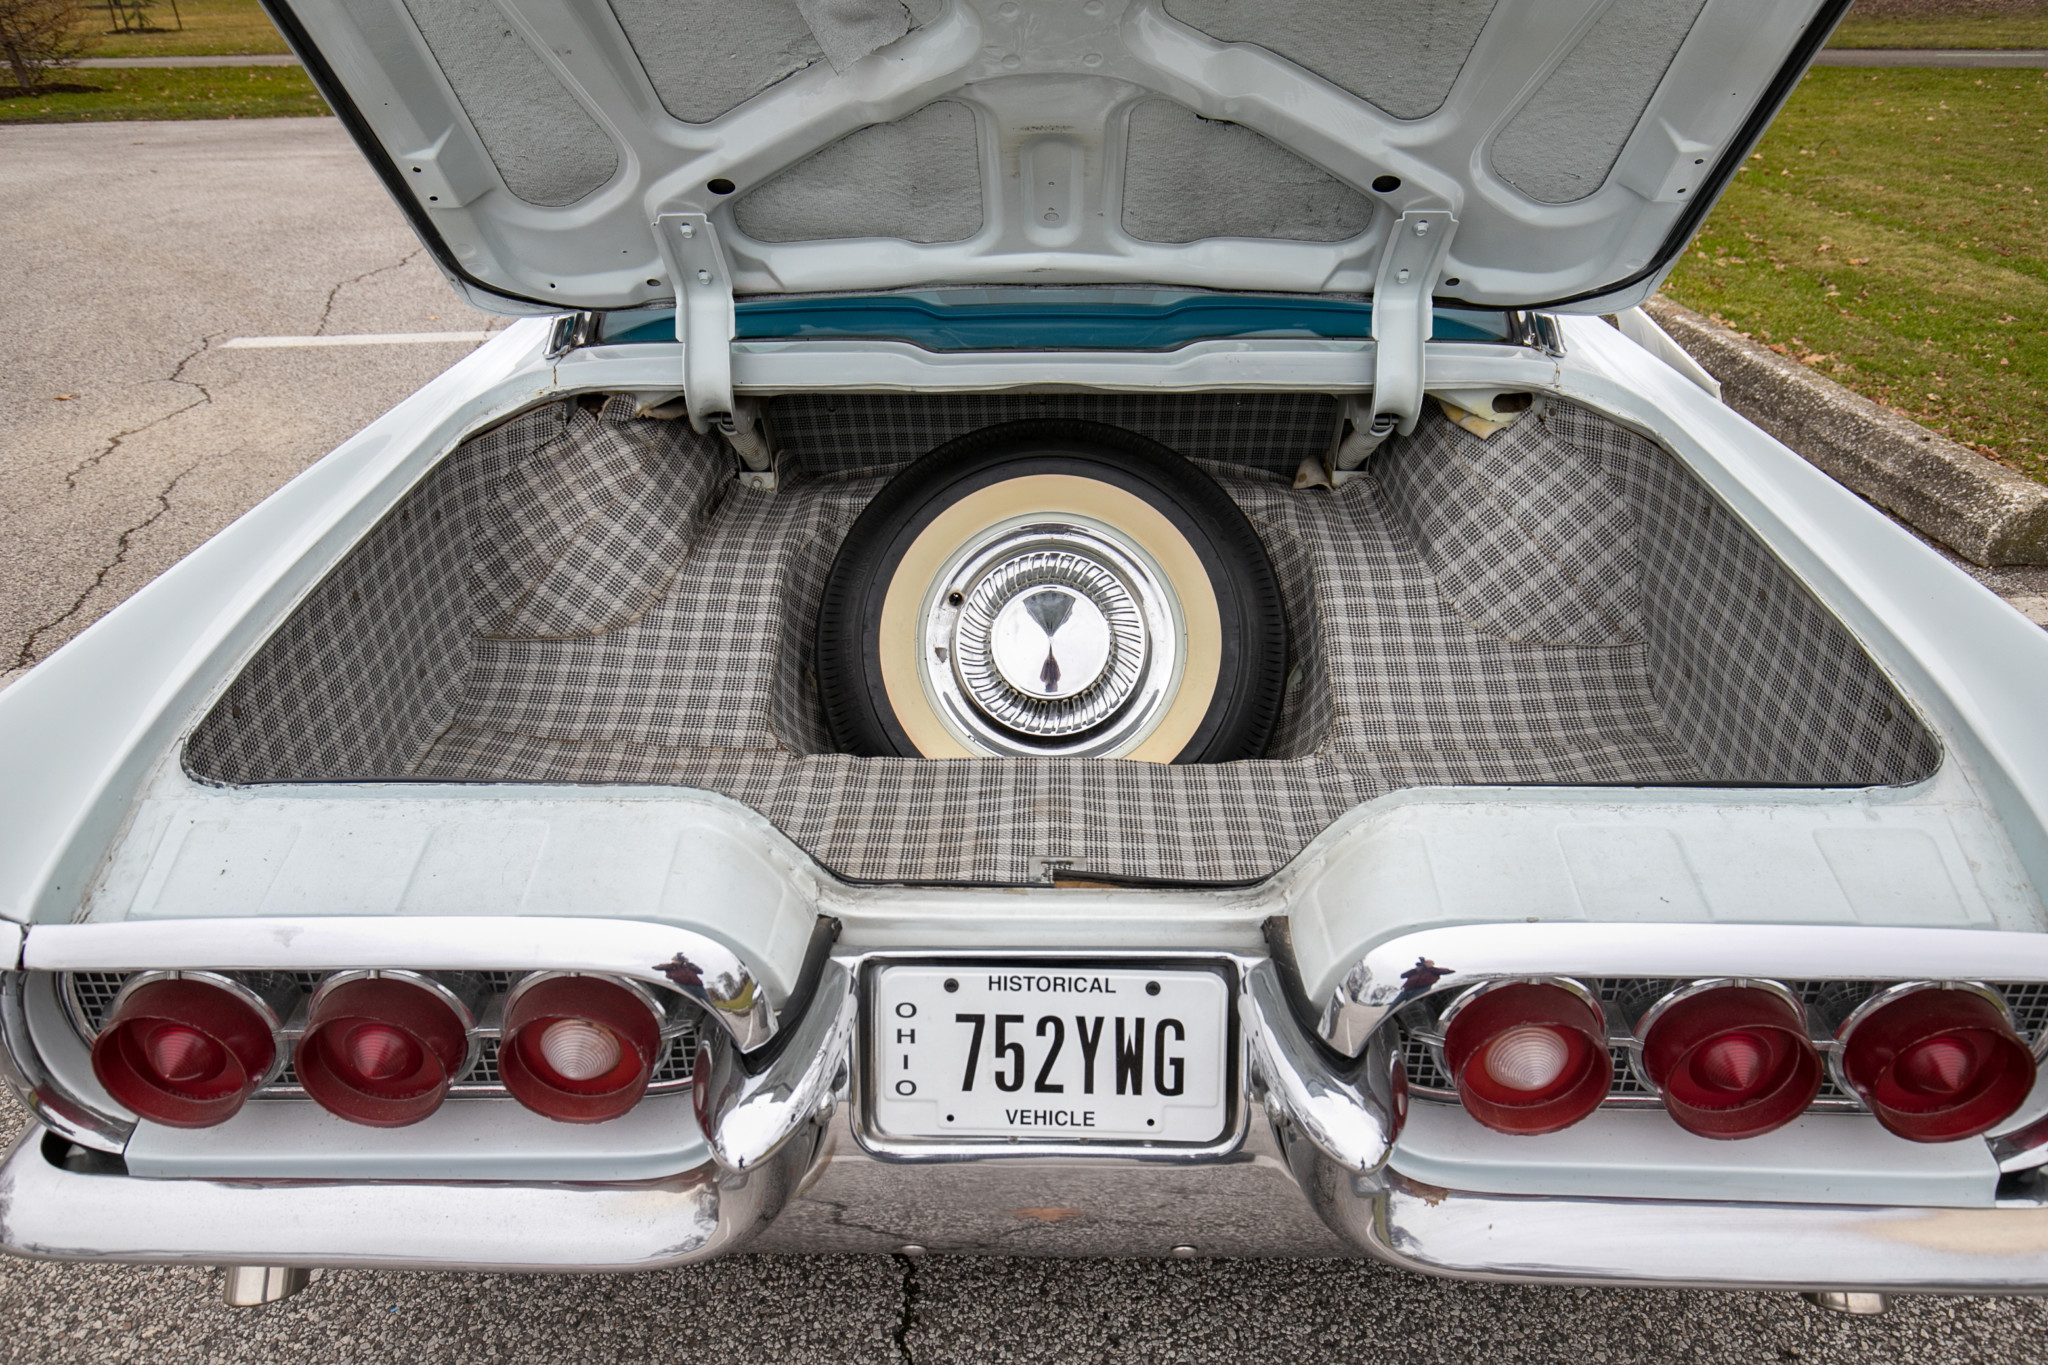 1960 Ford Thunderbird Trunk & Spare Tire